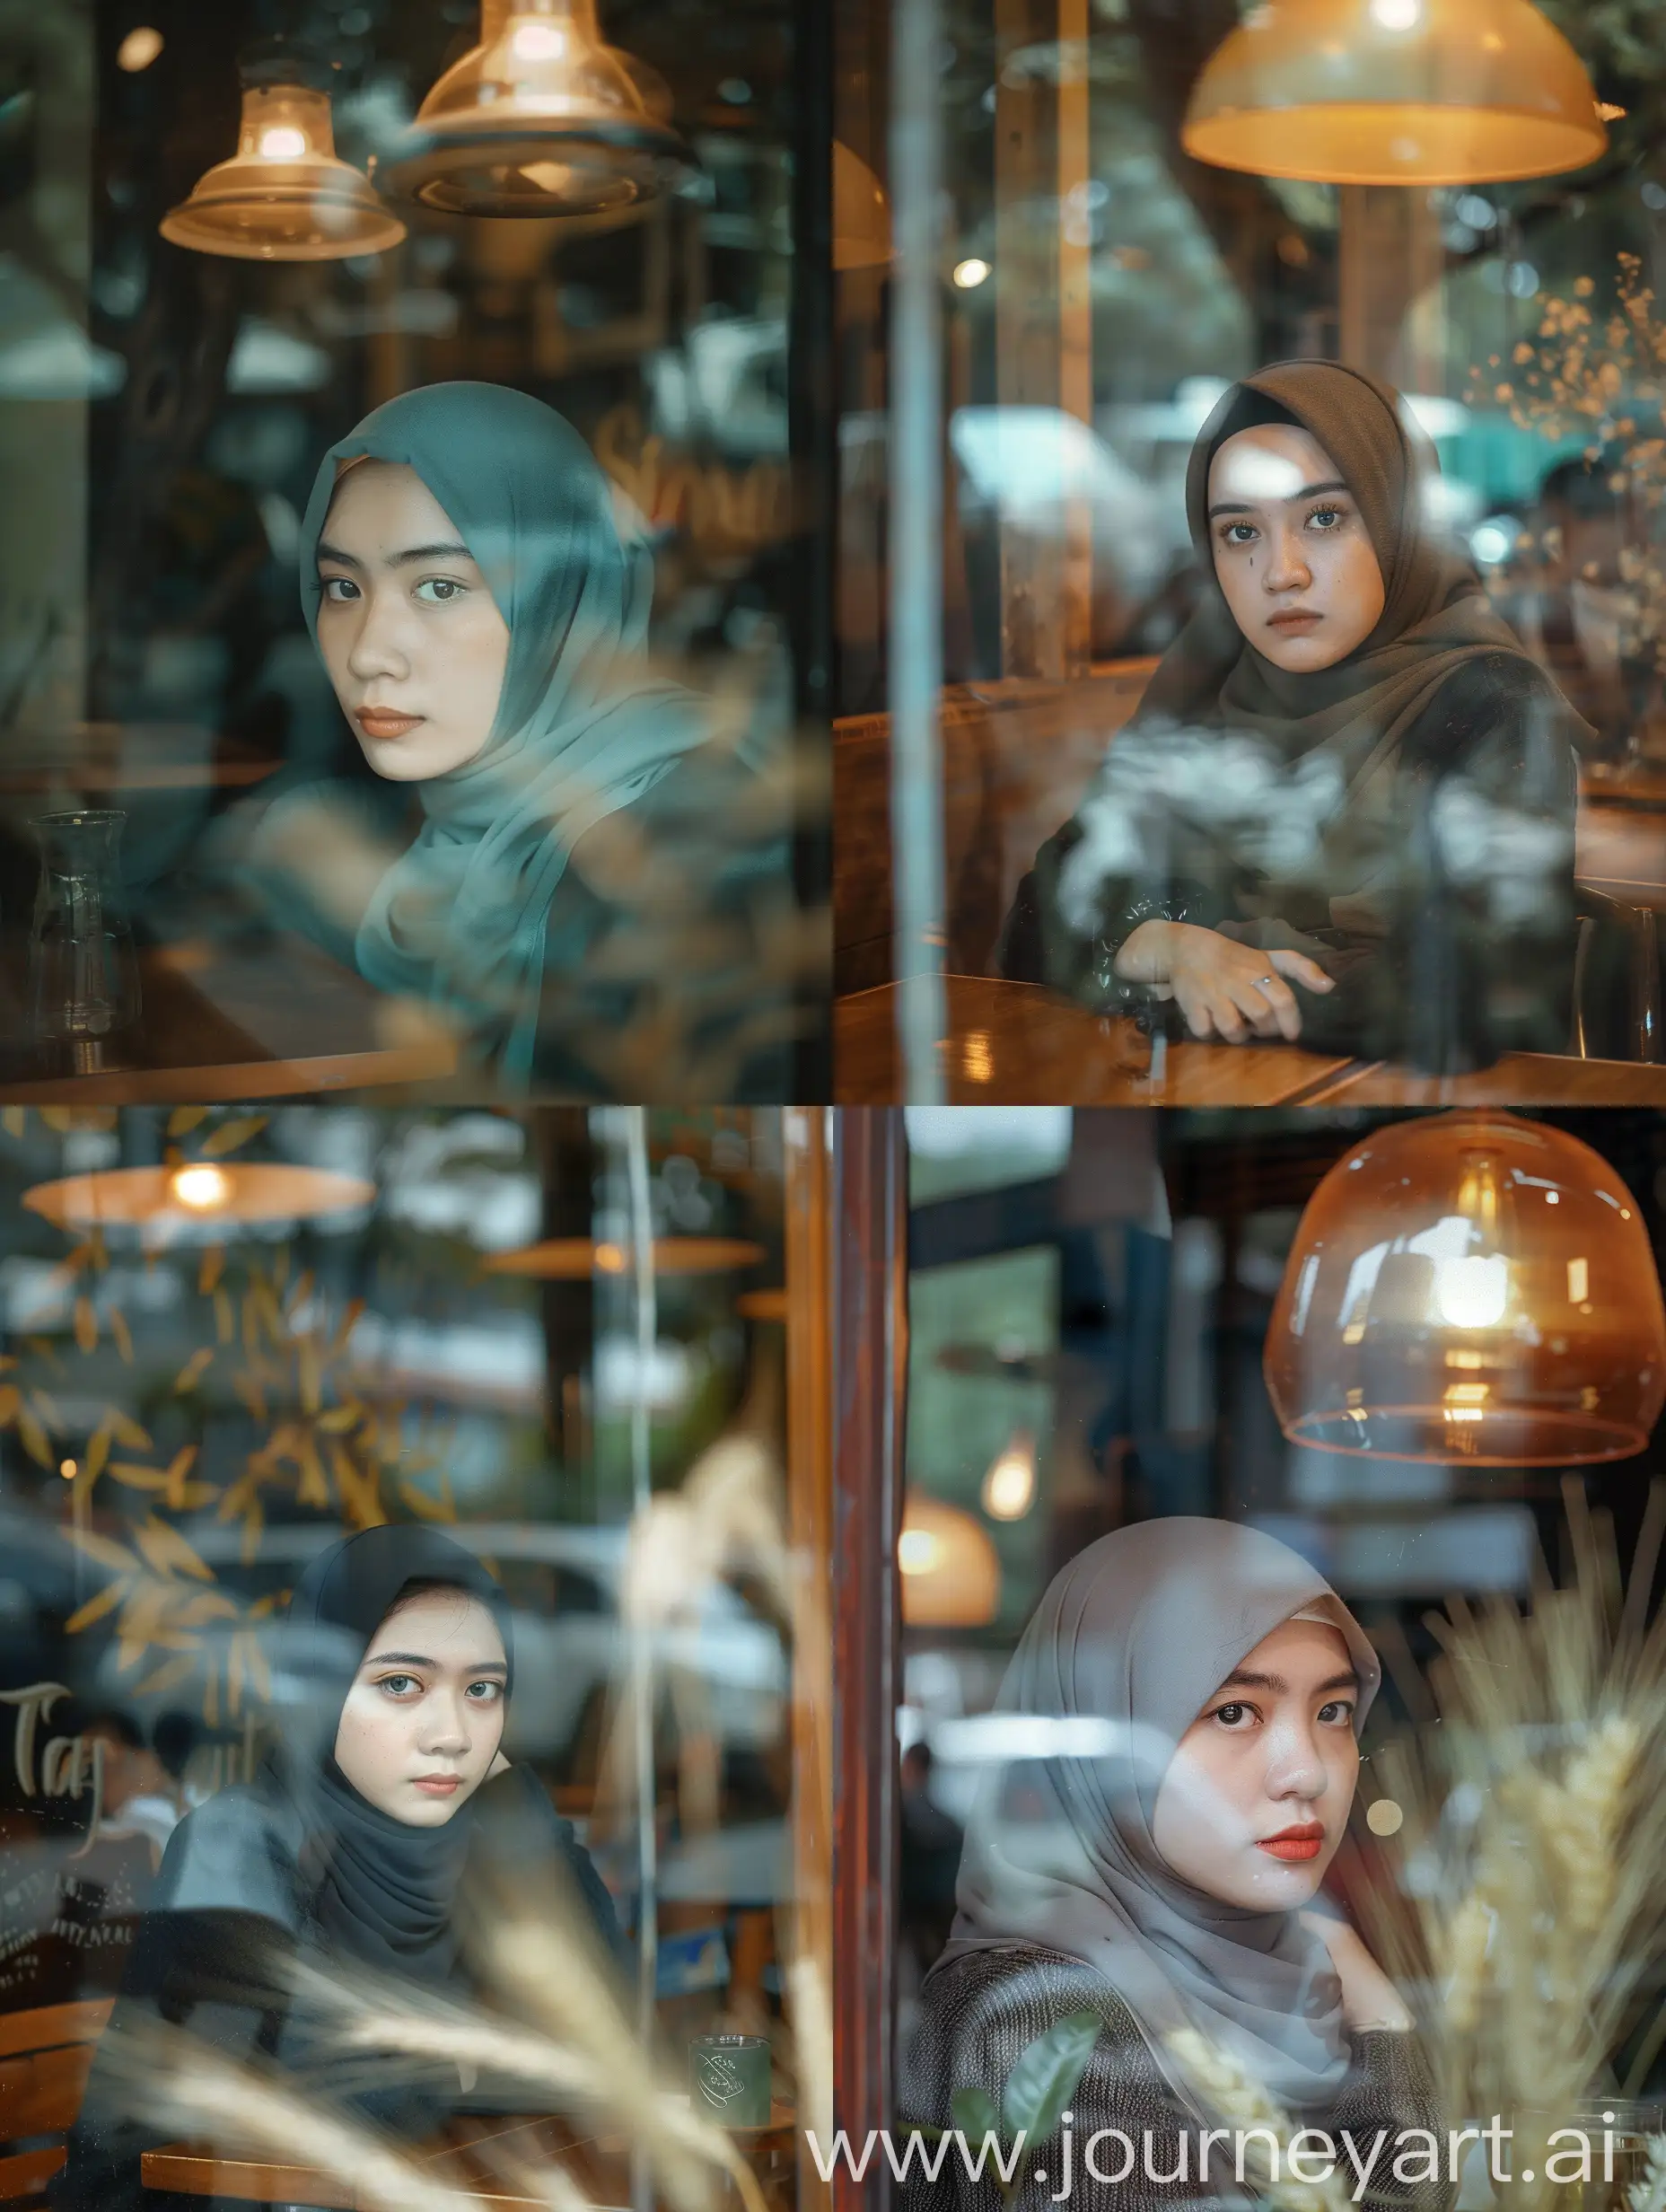 Indonesian-Hijab-Woman-Contemplating-by-Caf-Window-Nostalgic-Wheat-Film-Portrait